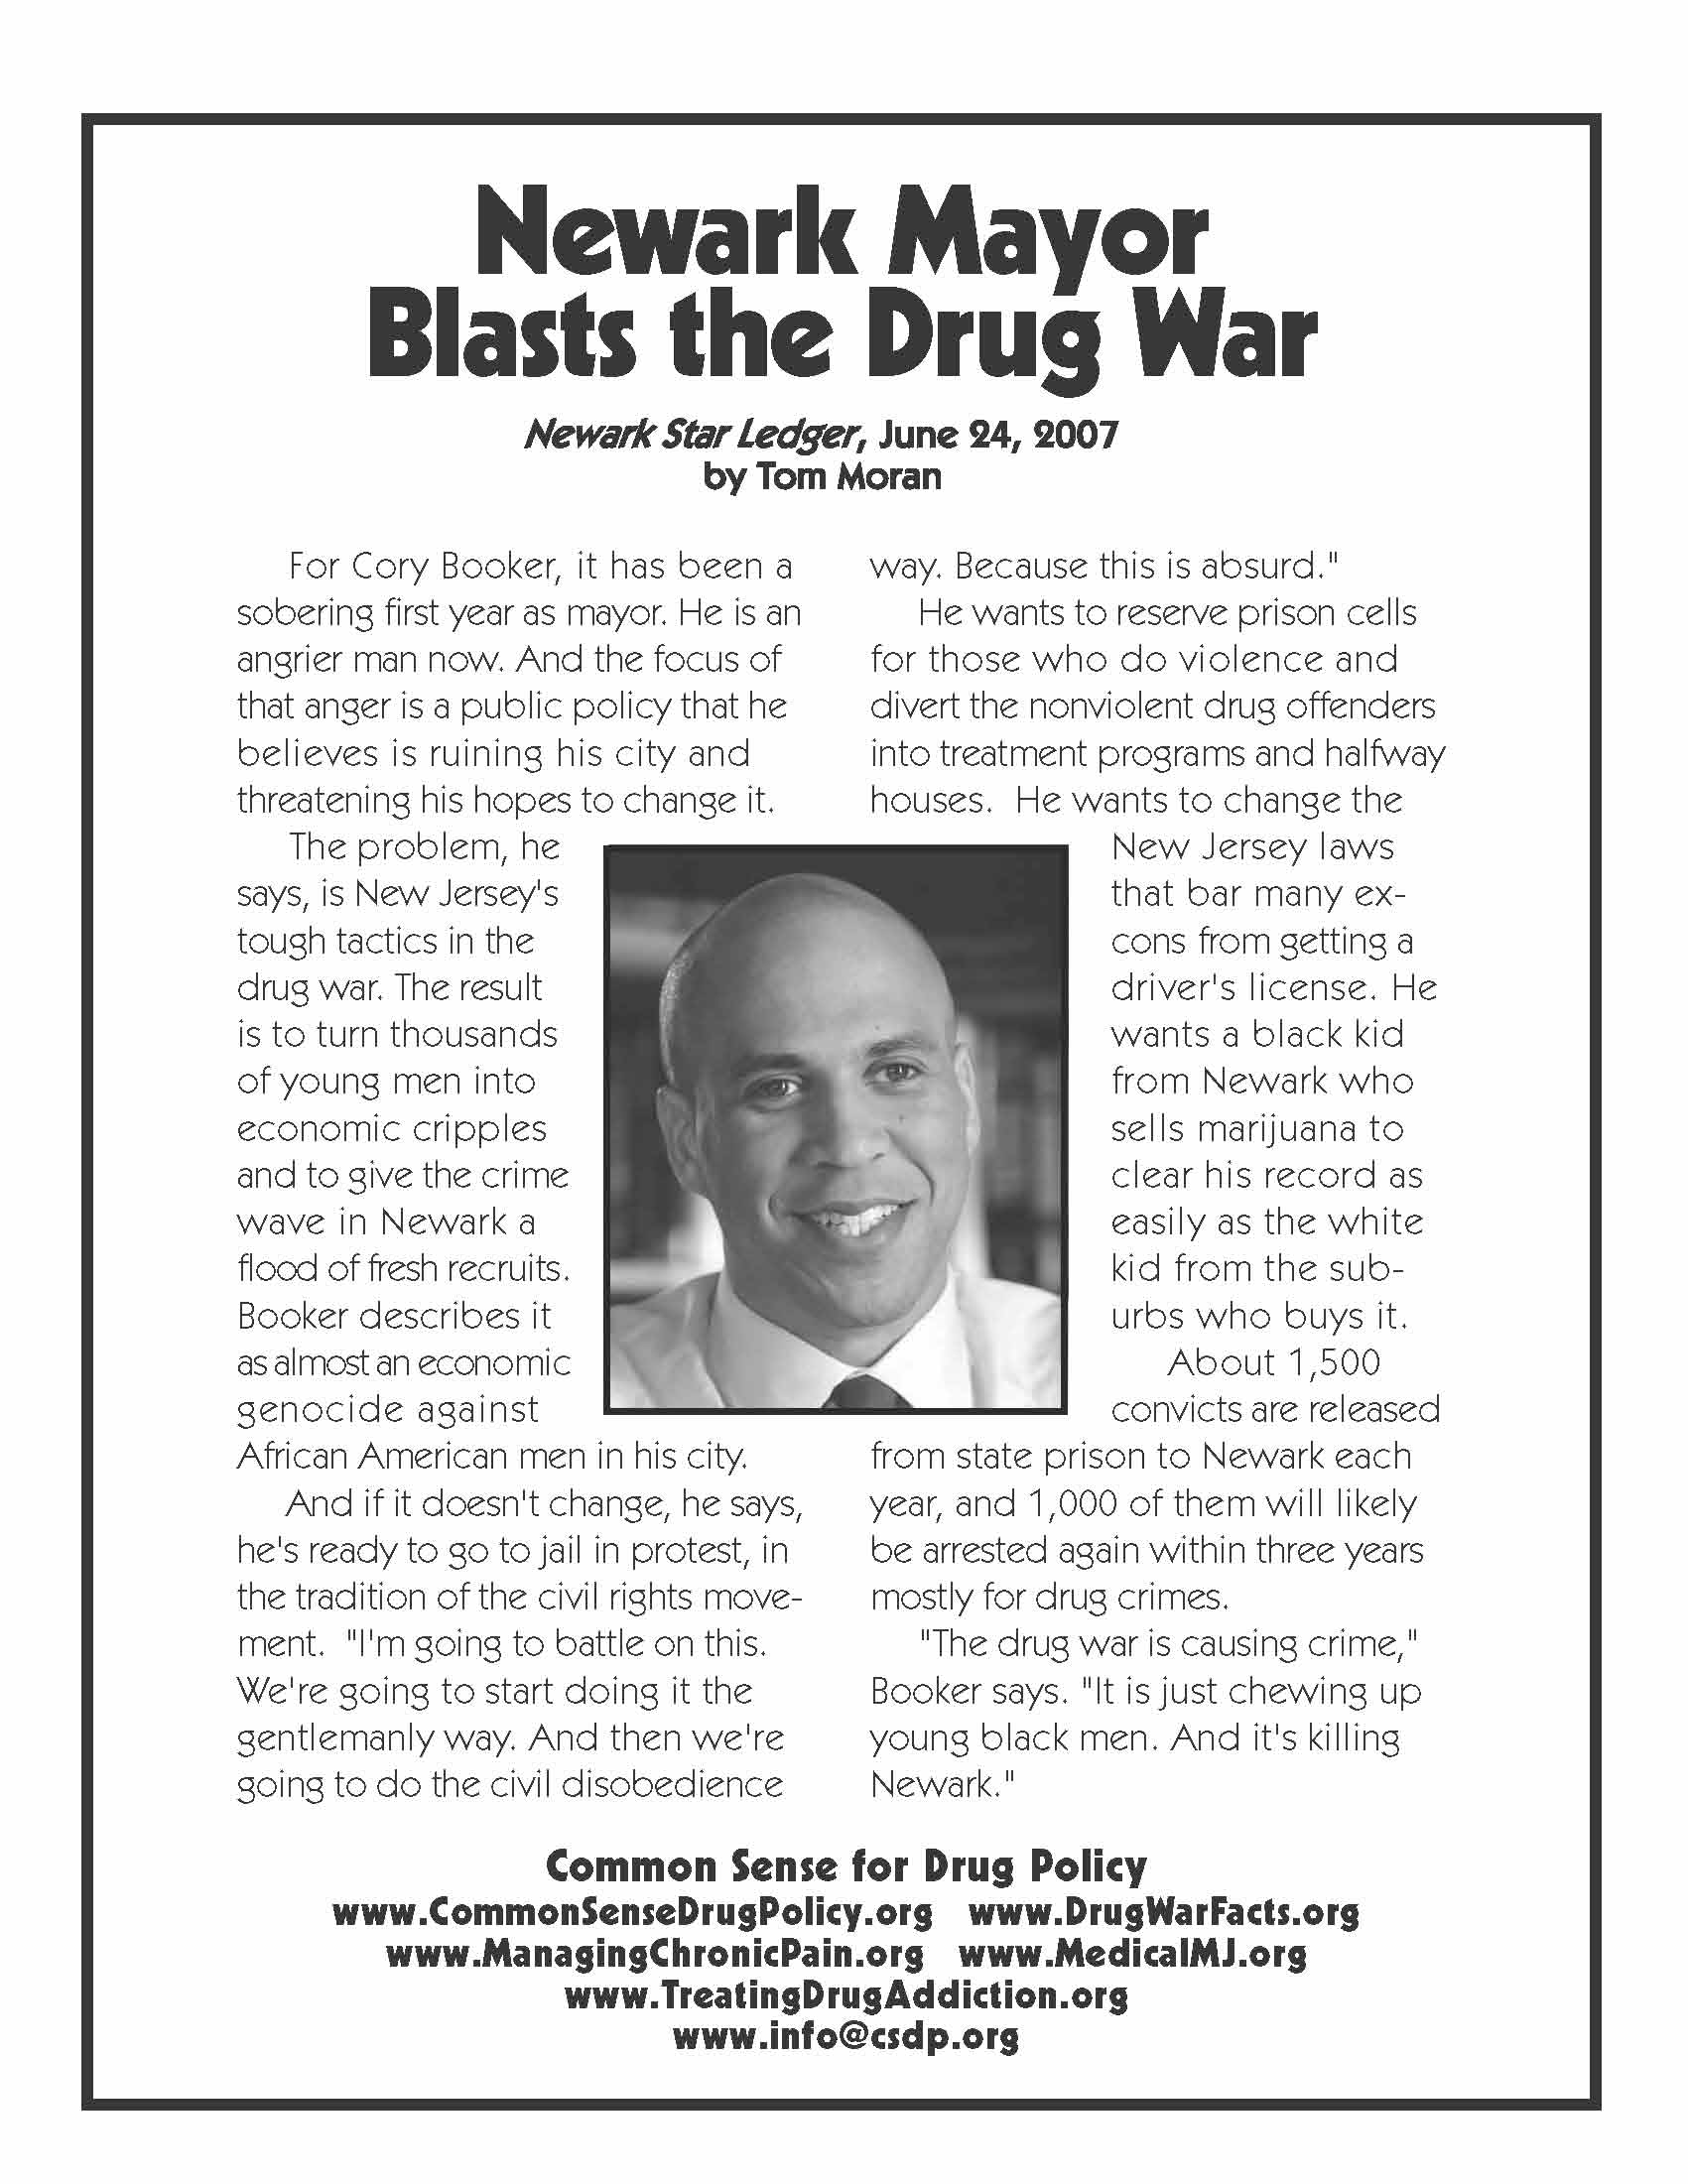 Newark Mayor Blasts The Drug War